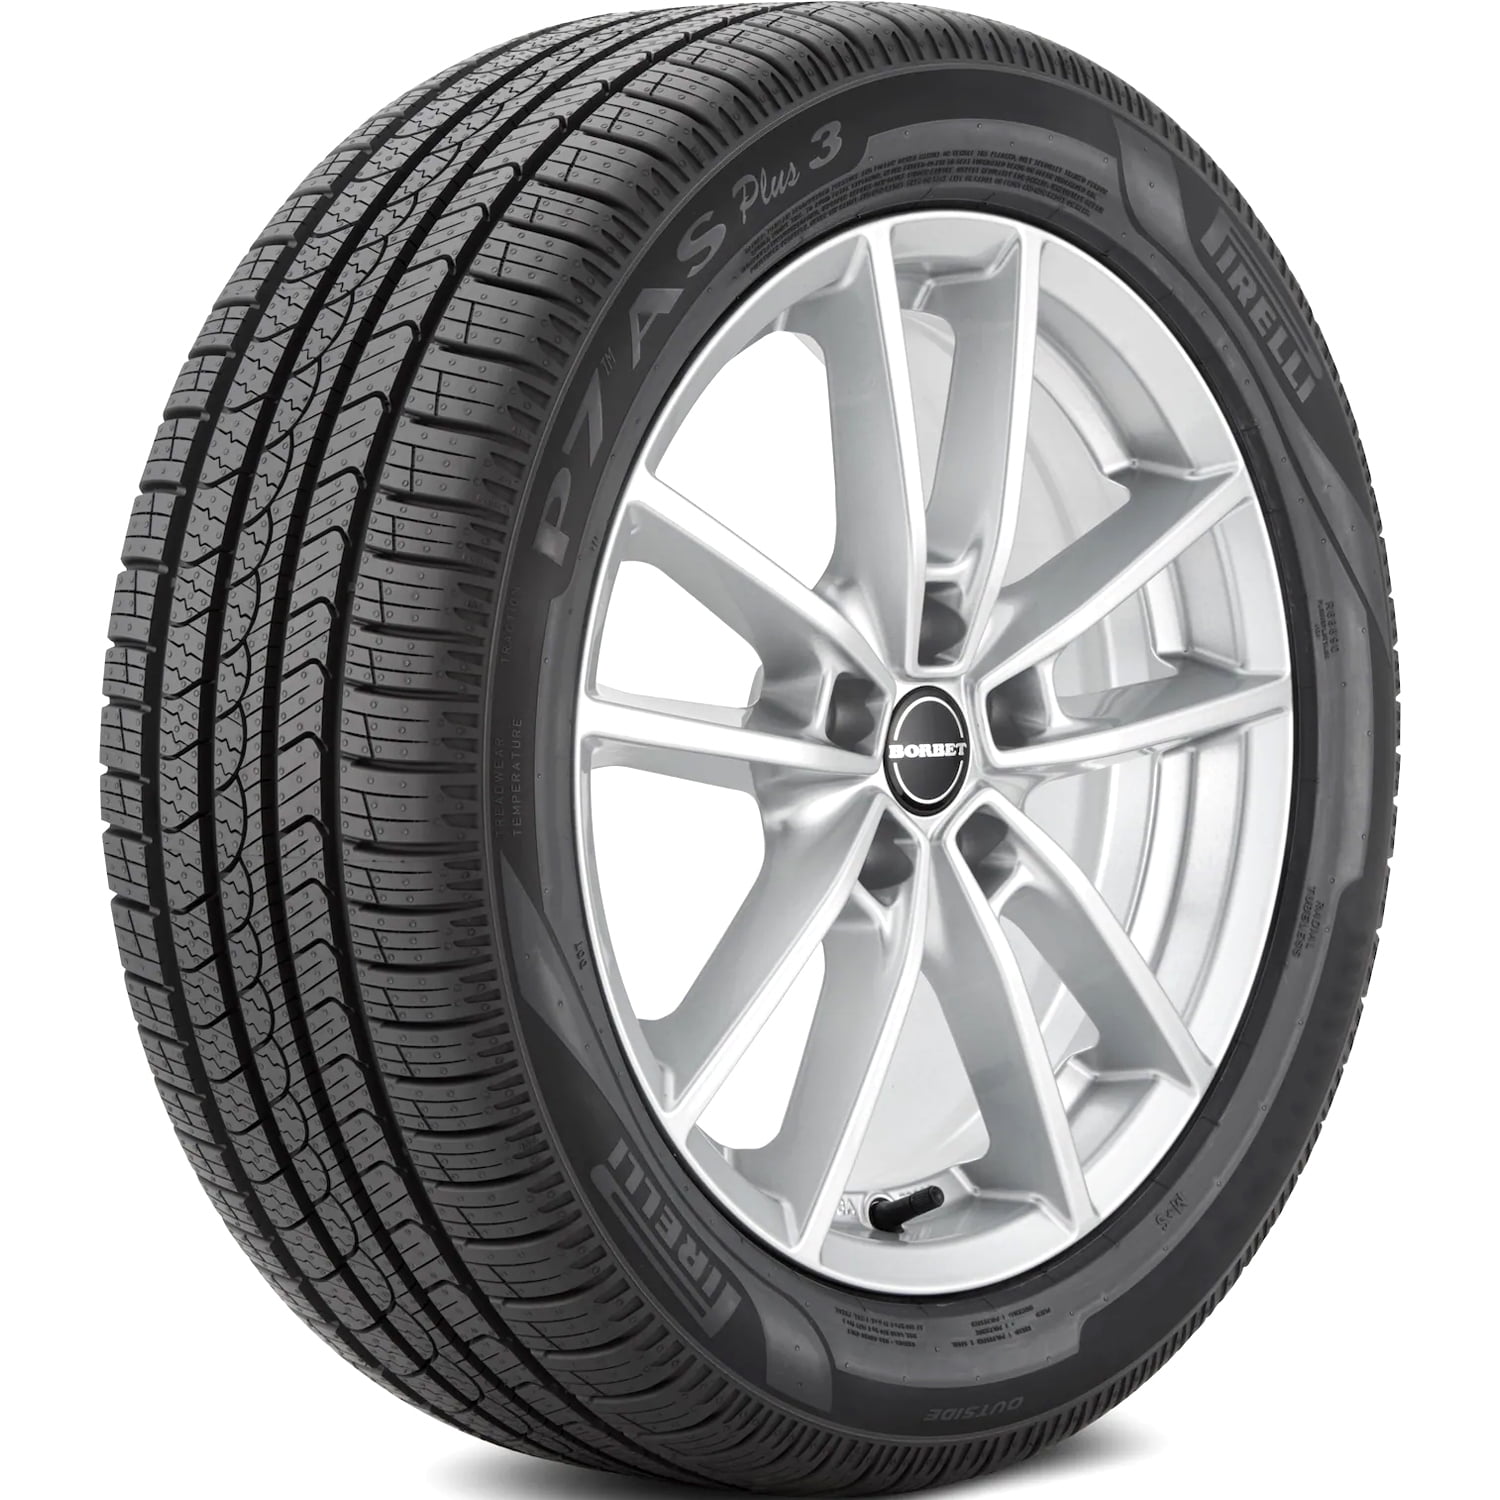 Tire Pirelli P7 AS Plus 3 215/45R17 91V XL A/S Performance